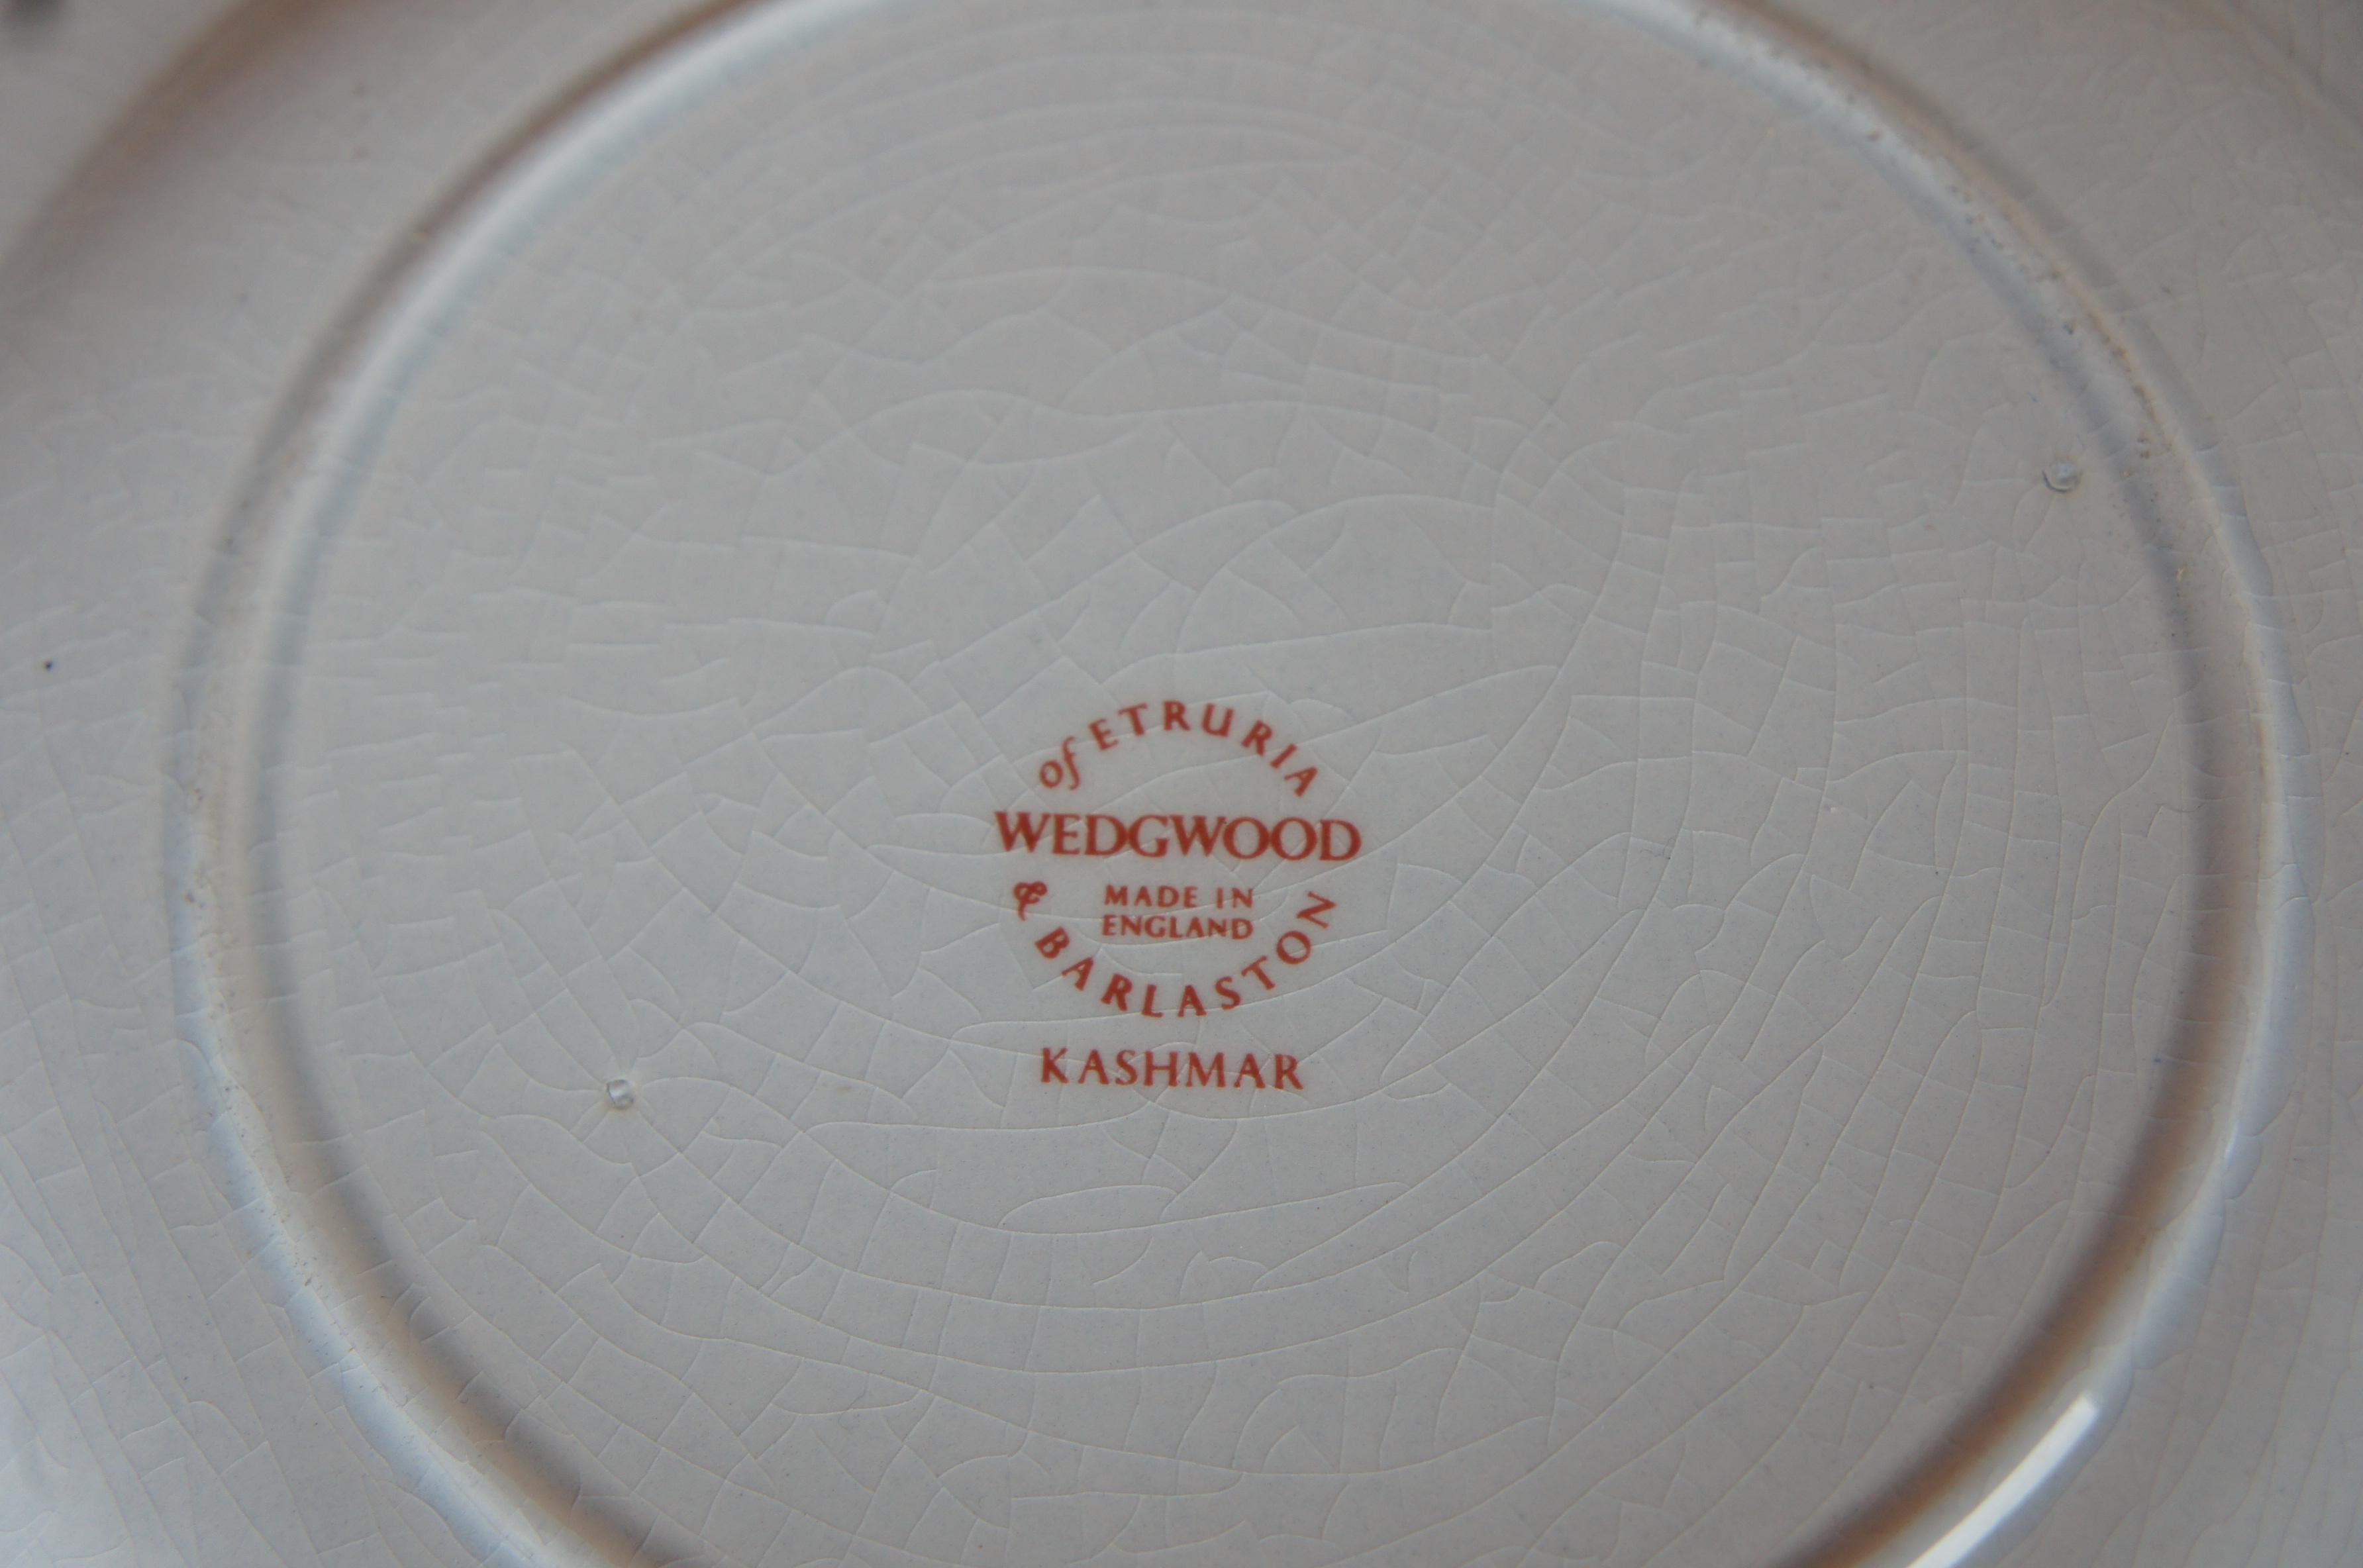 wedgwood of etruria & barlaston plate